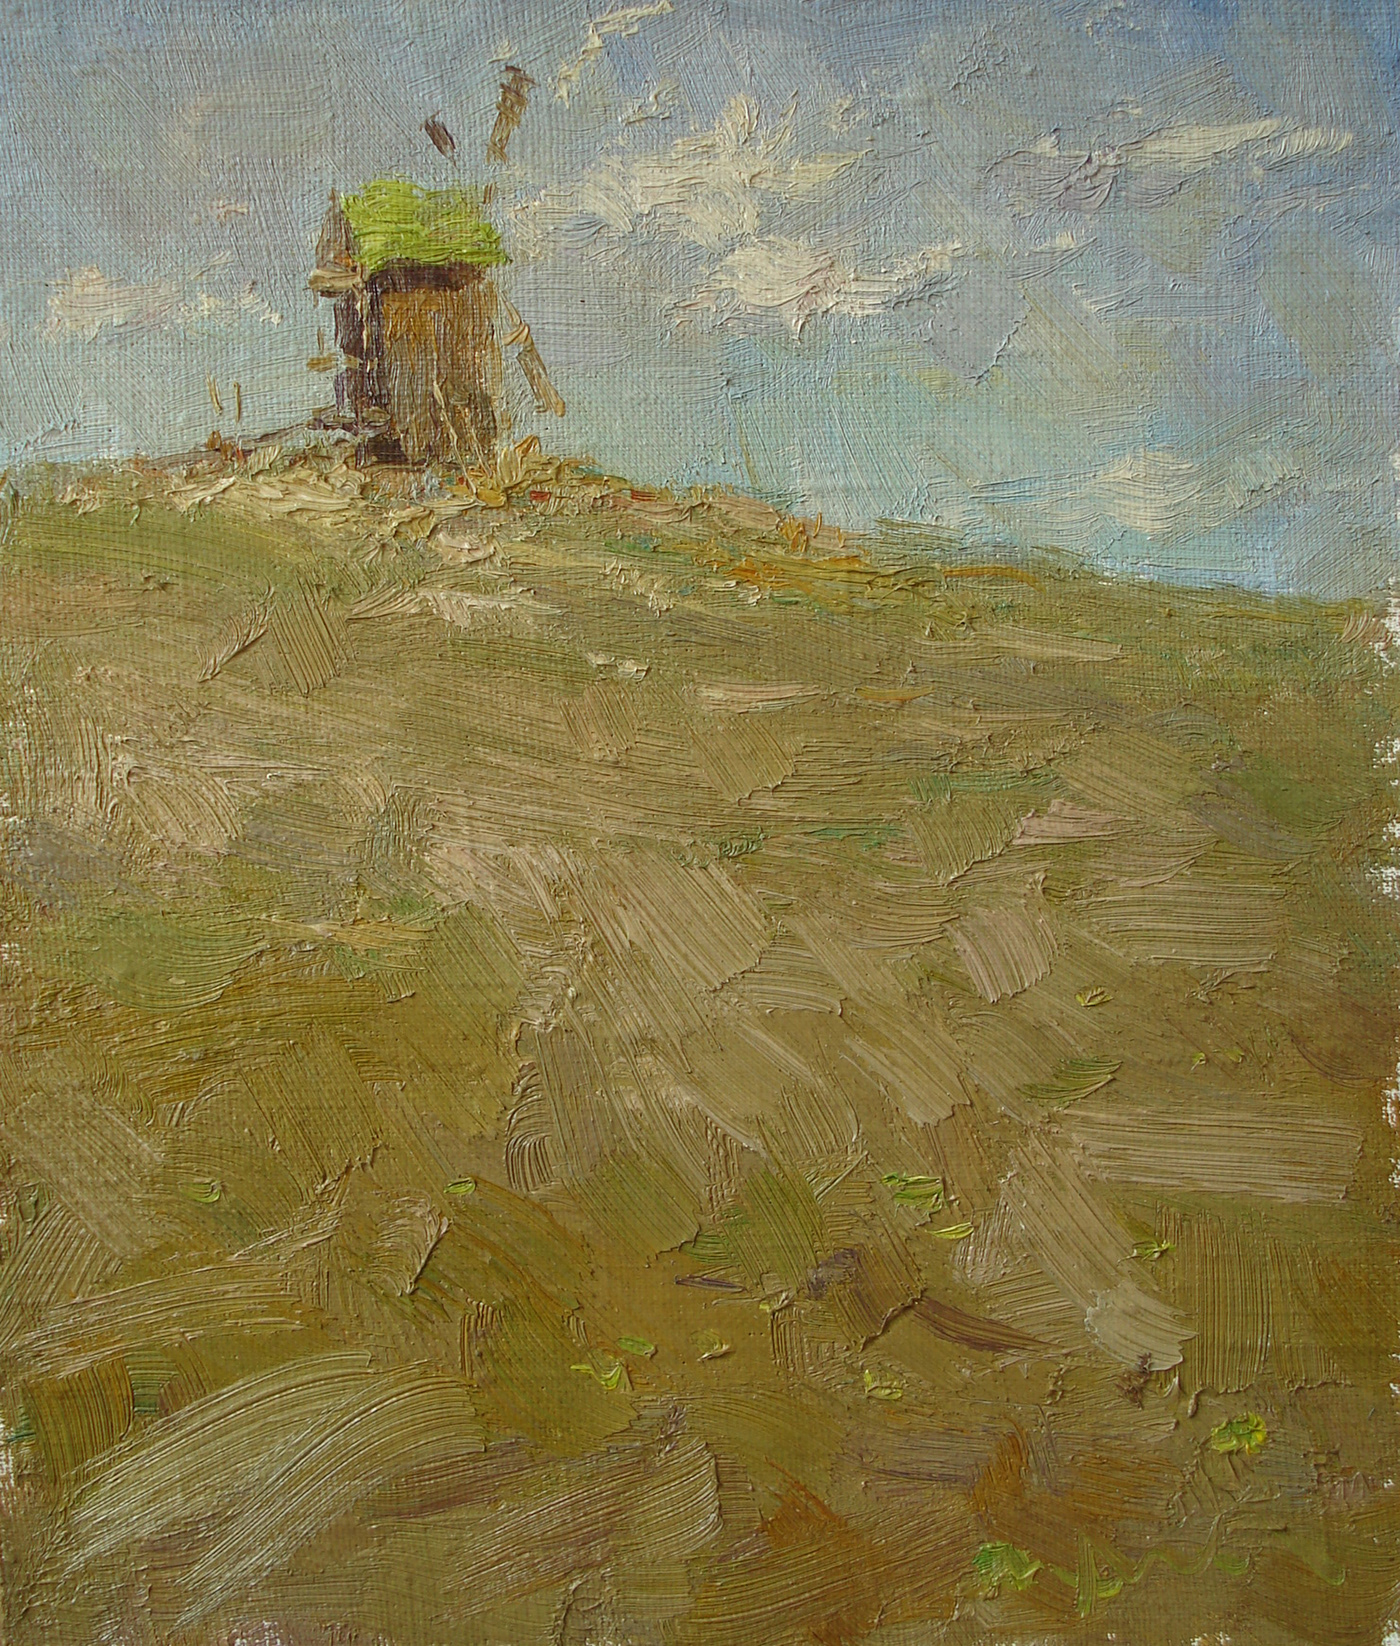 plein air Oil Painting oil on canvas ukraine traditional Ethnic village countryside hut pleinair